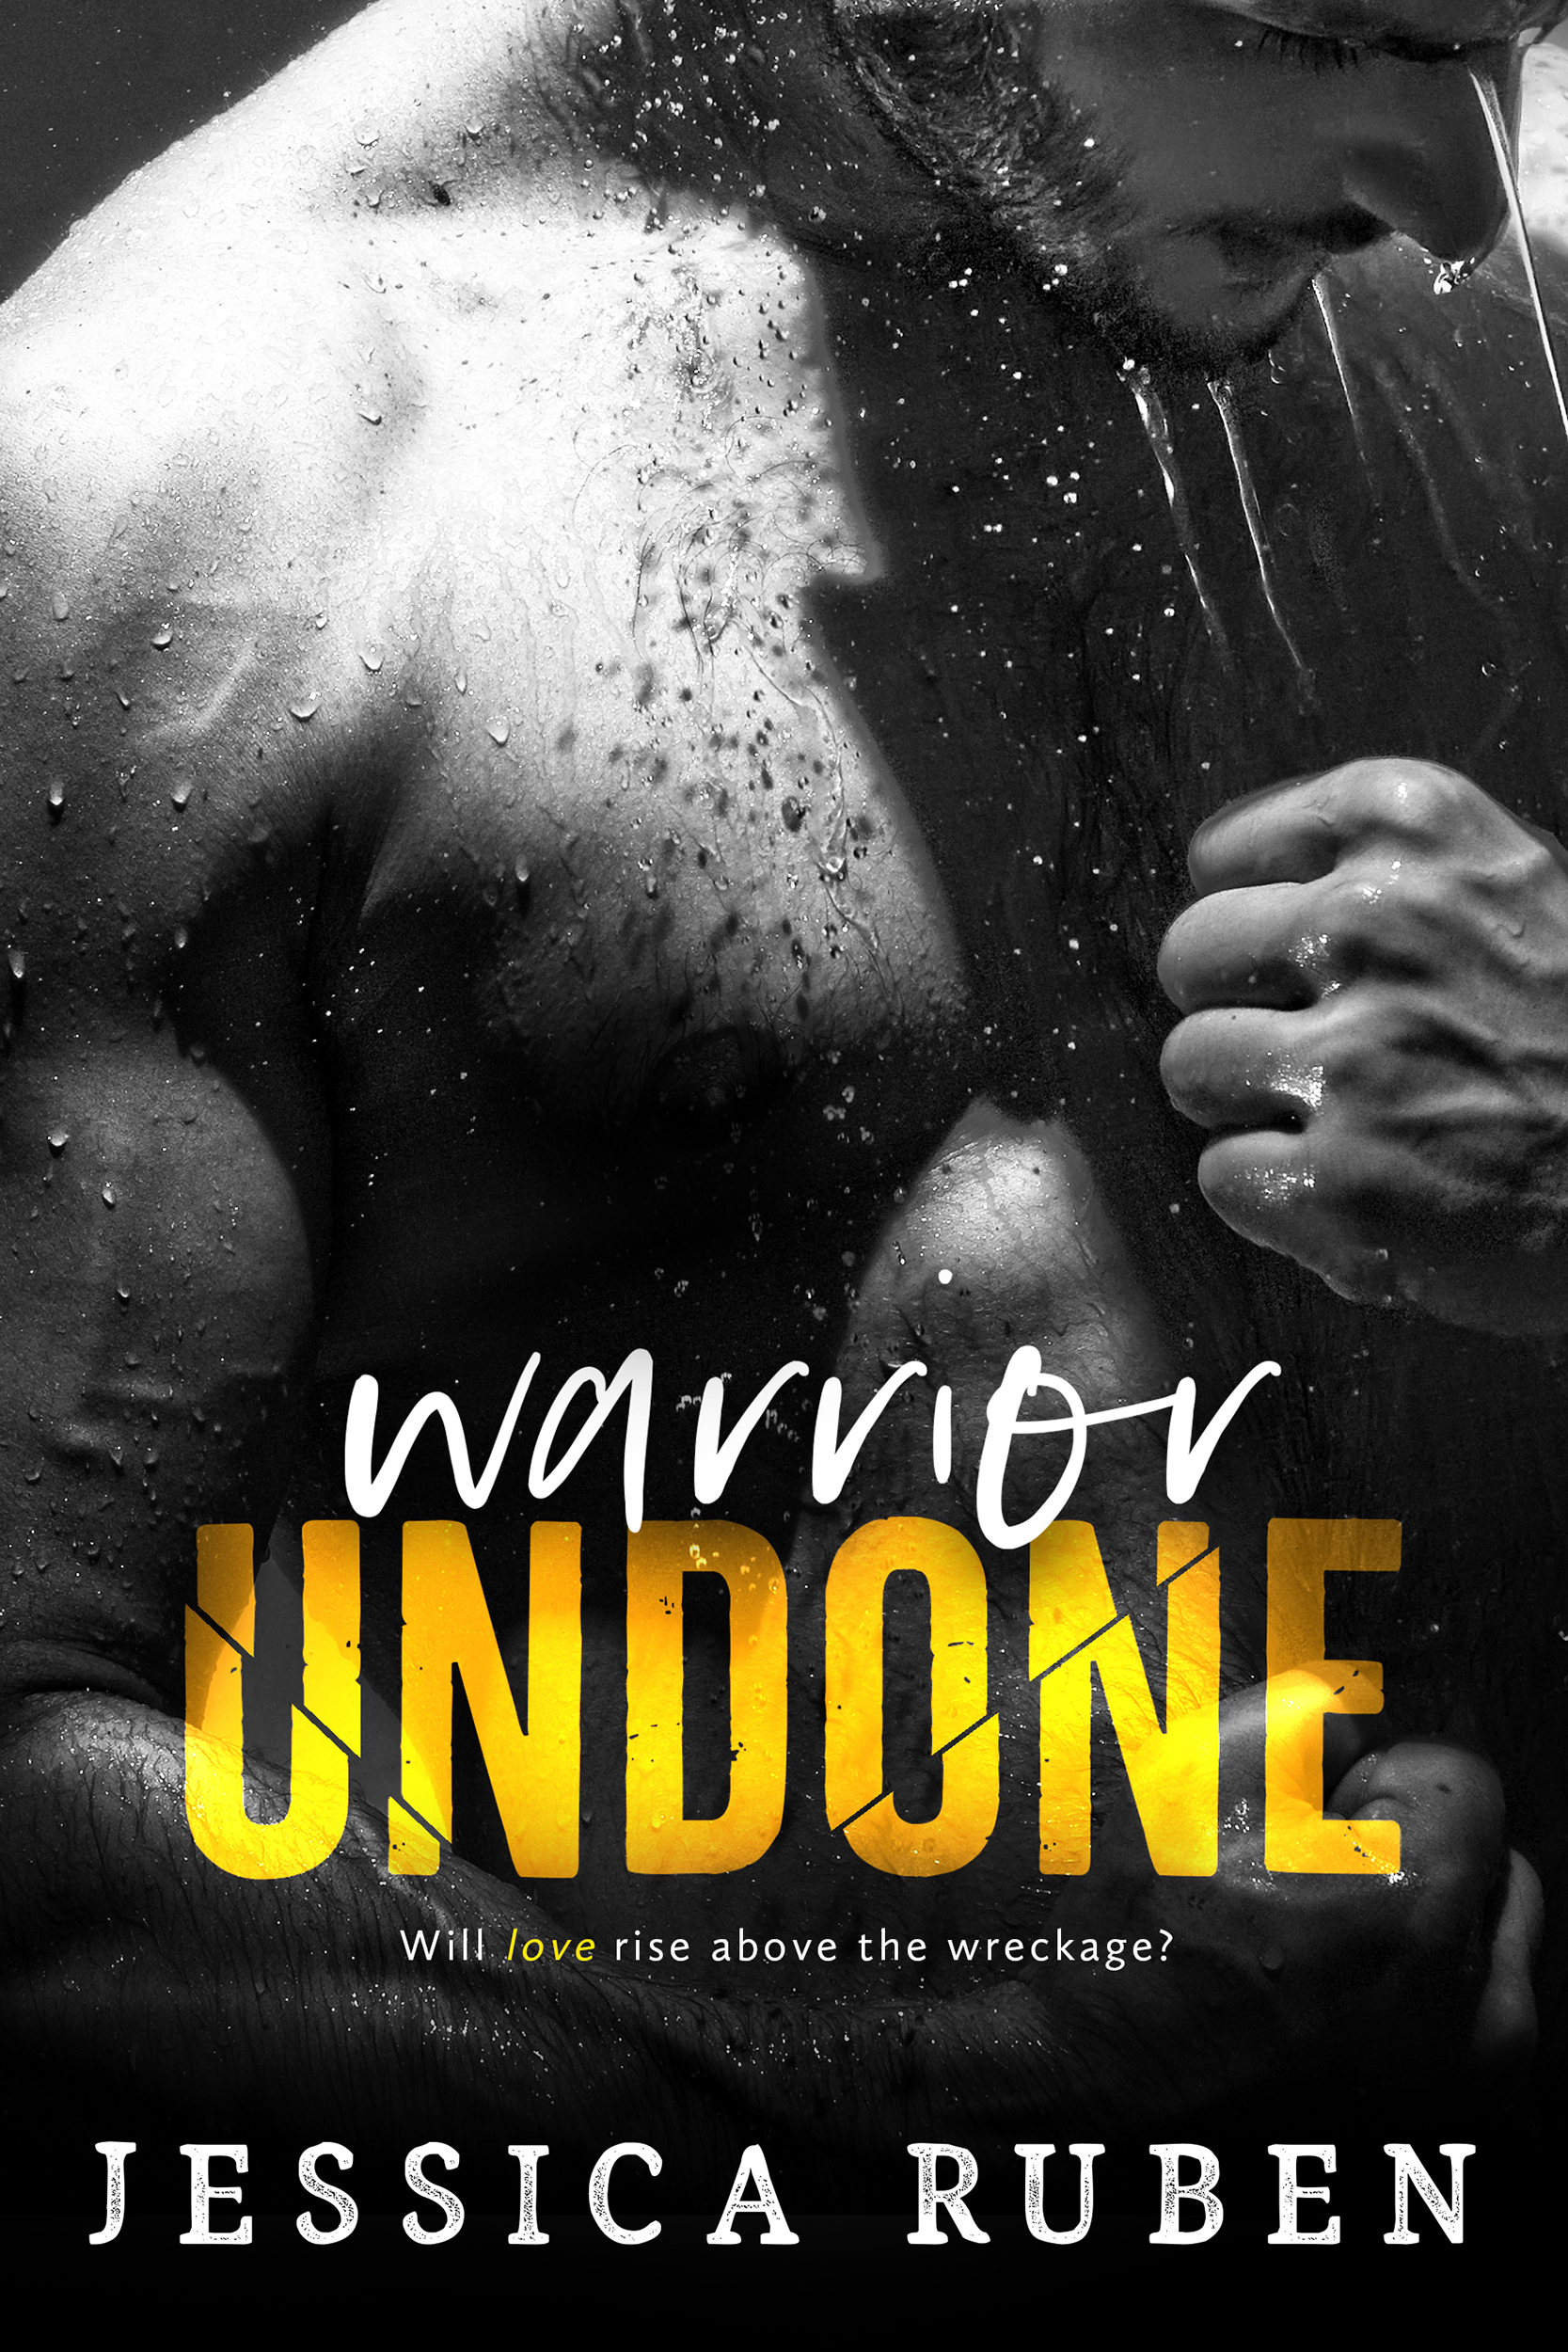 Warrior Undone by Jessica Ruban [Blog Tour]